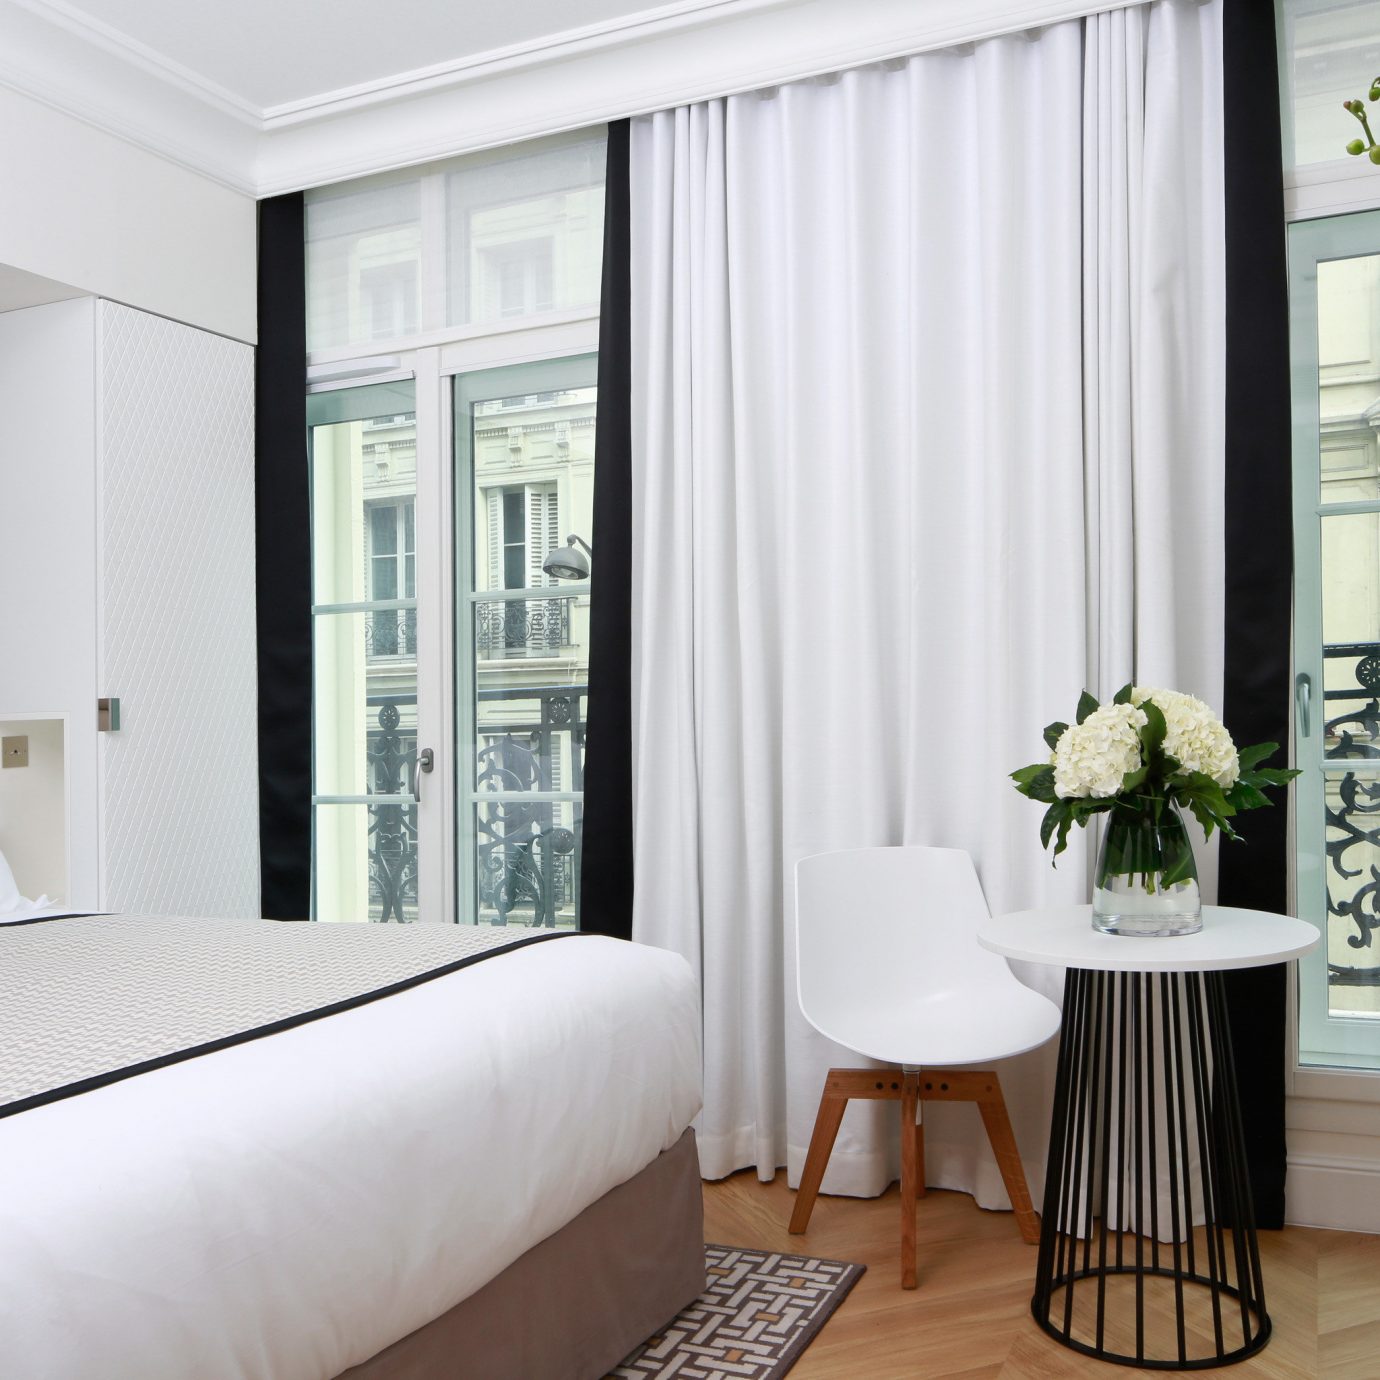 Bedroom City Hip Modern Trip Ideas property curtain home Suite window treatment textile cottage